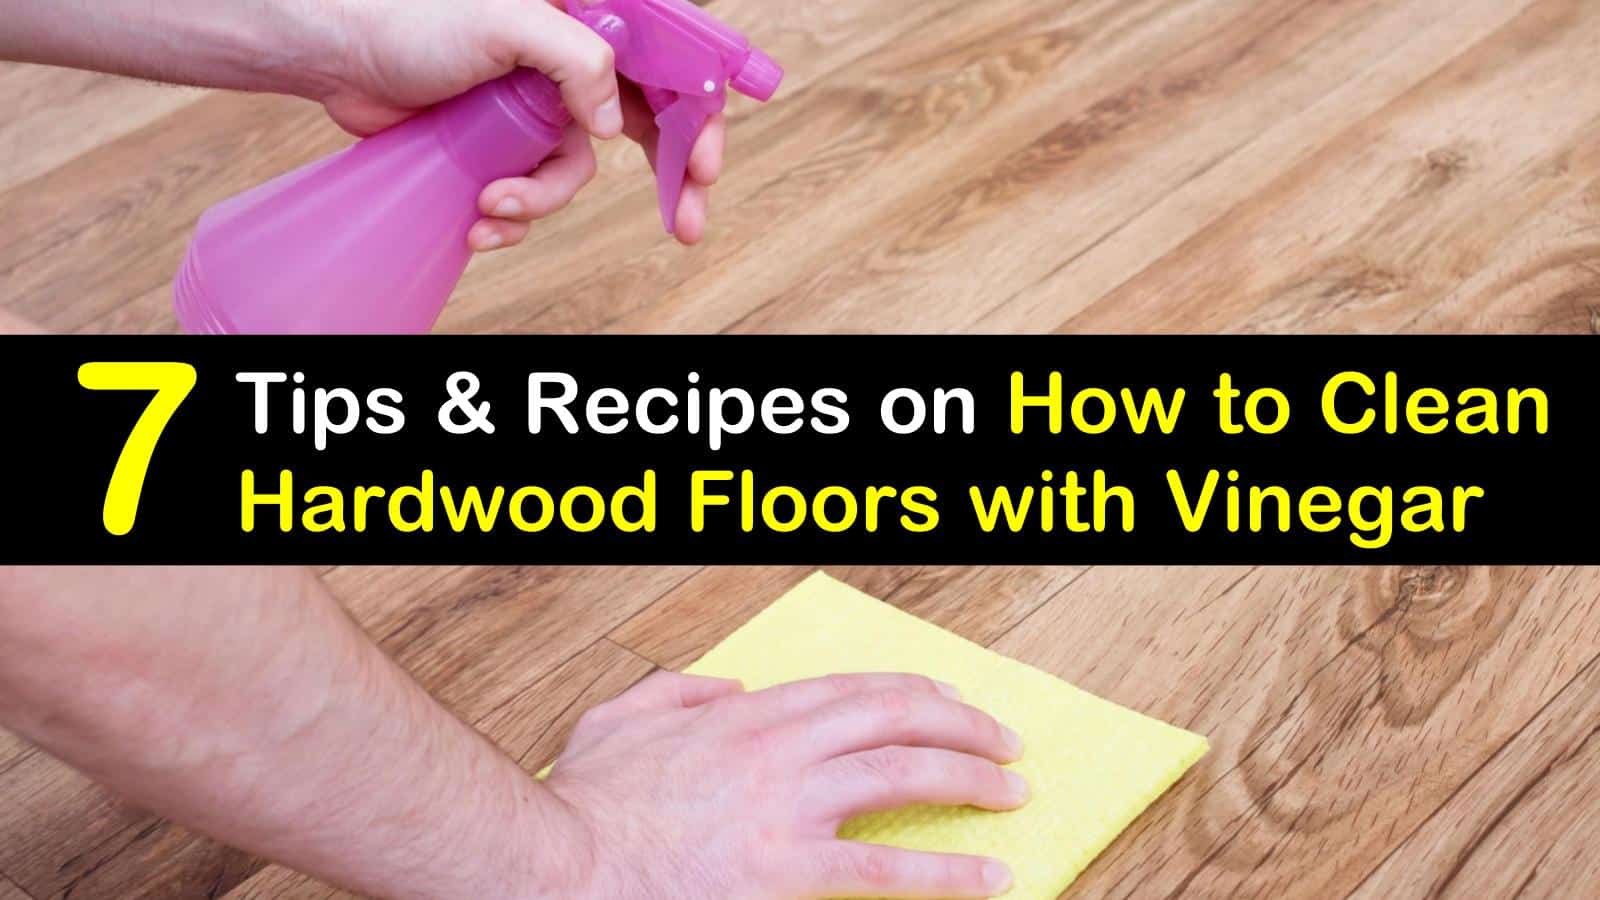 Clean Hardwood Floors With Vinegar, Cleaning Hardwood Floors With Dawn